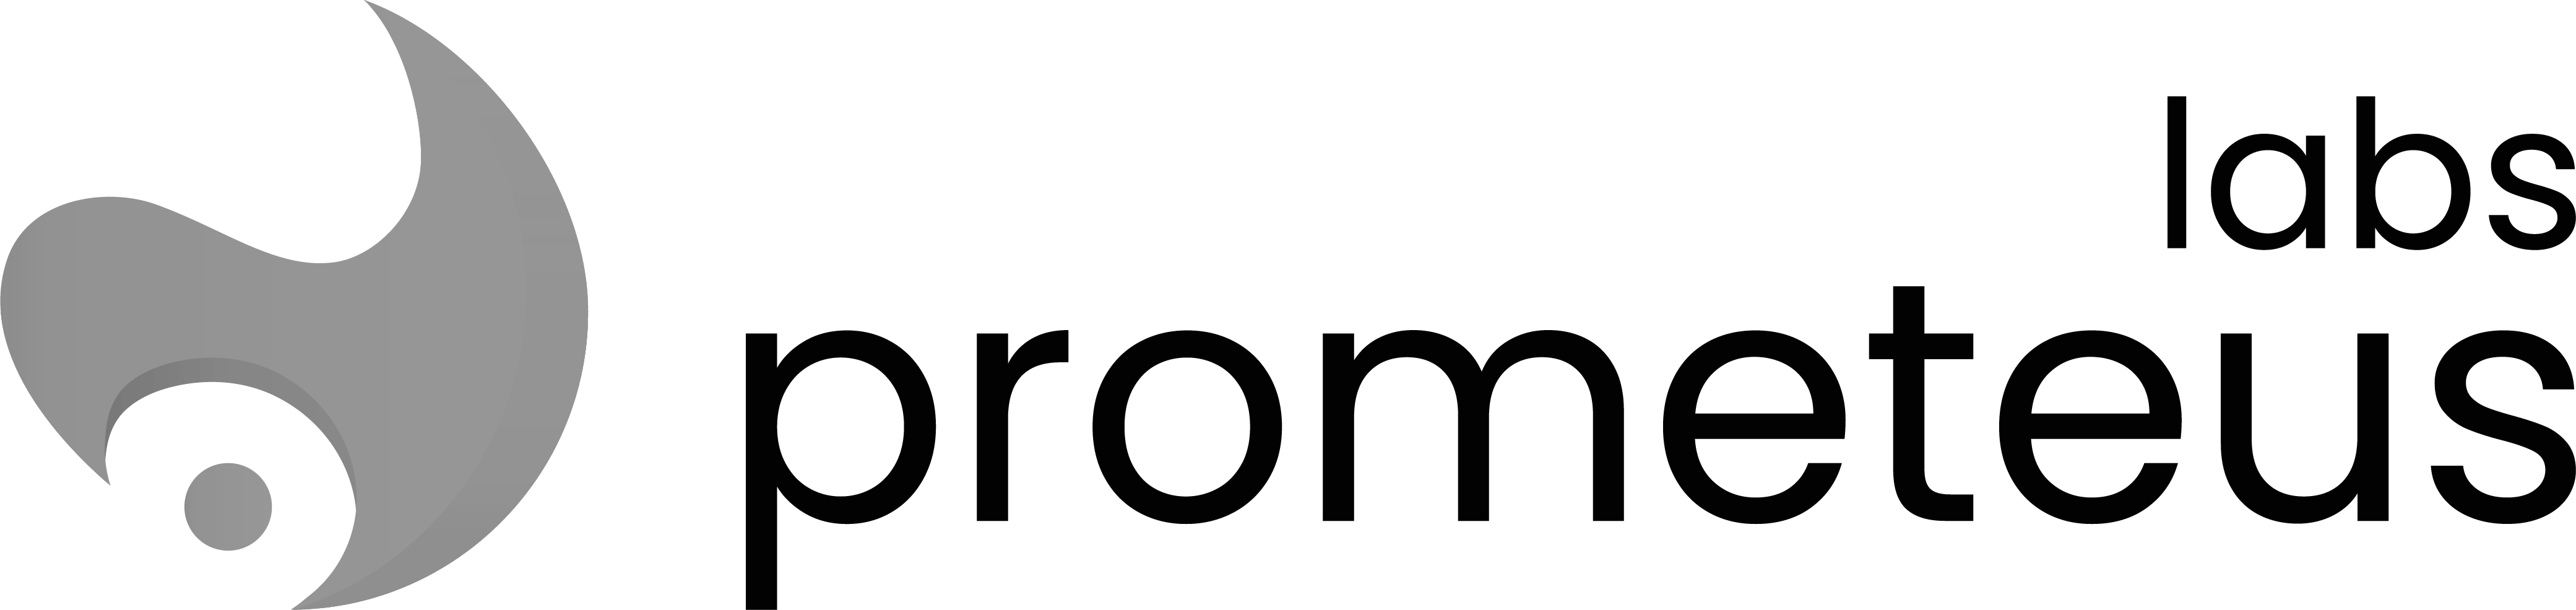 prometeuslabs logo image